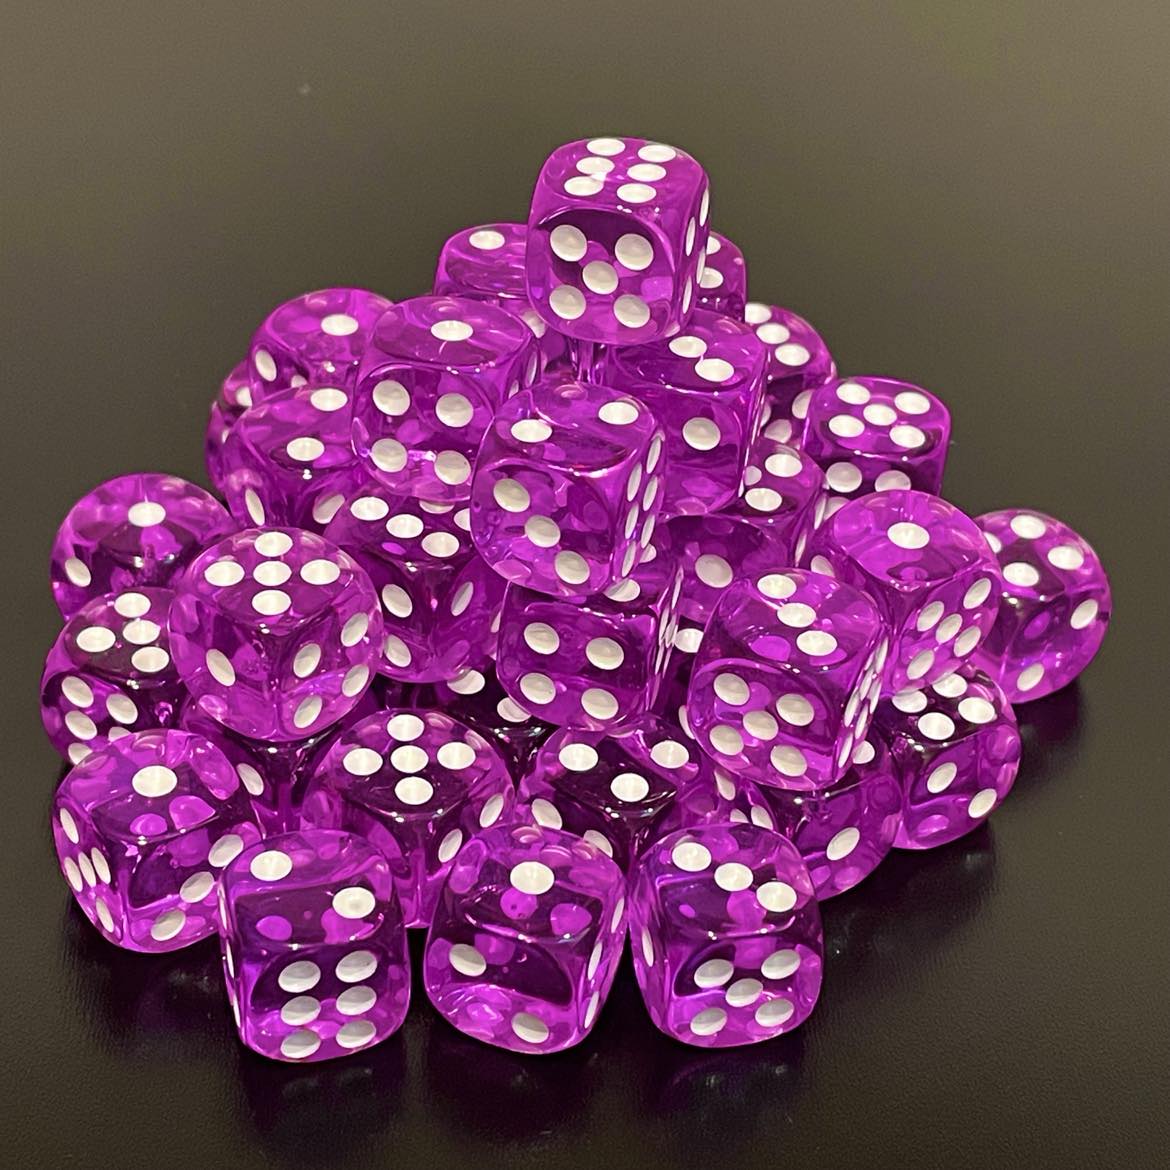 12mm Dice Transparent Purple (48)